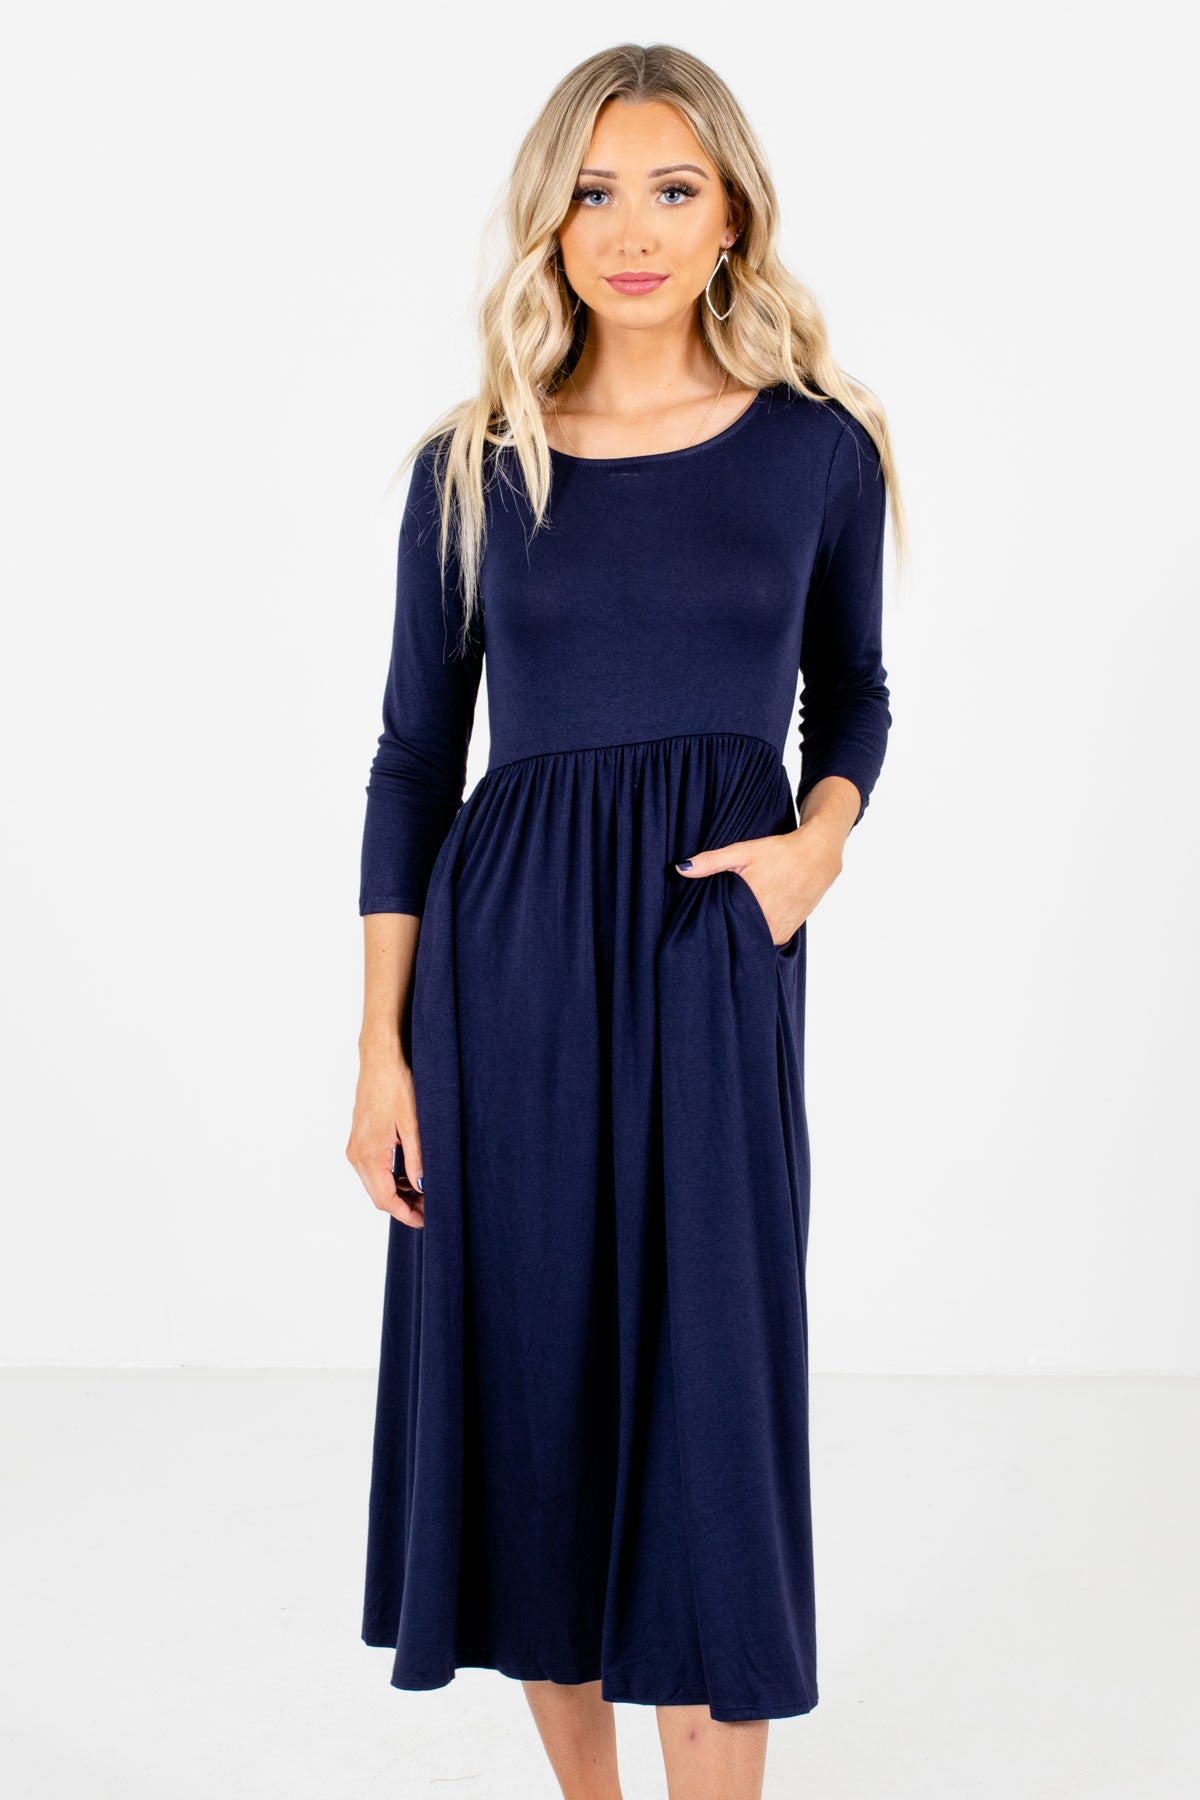 Navy Blue ¾ Length Sleeve Boutique Midi Dresses for Women